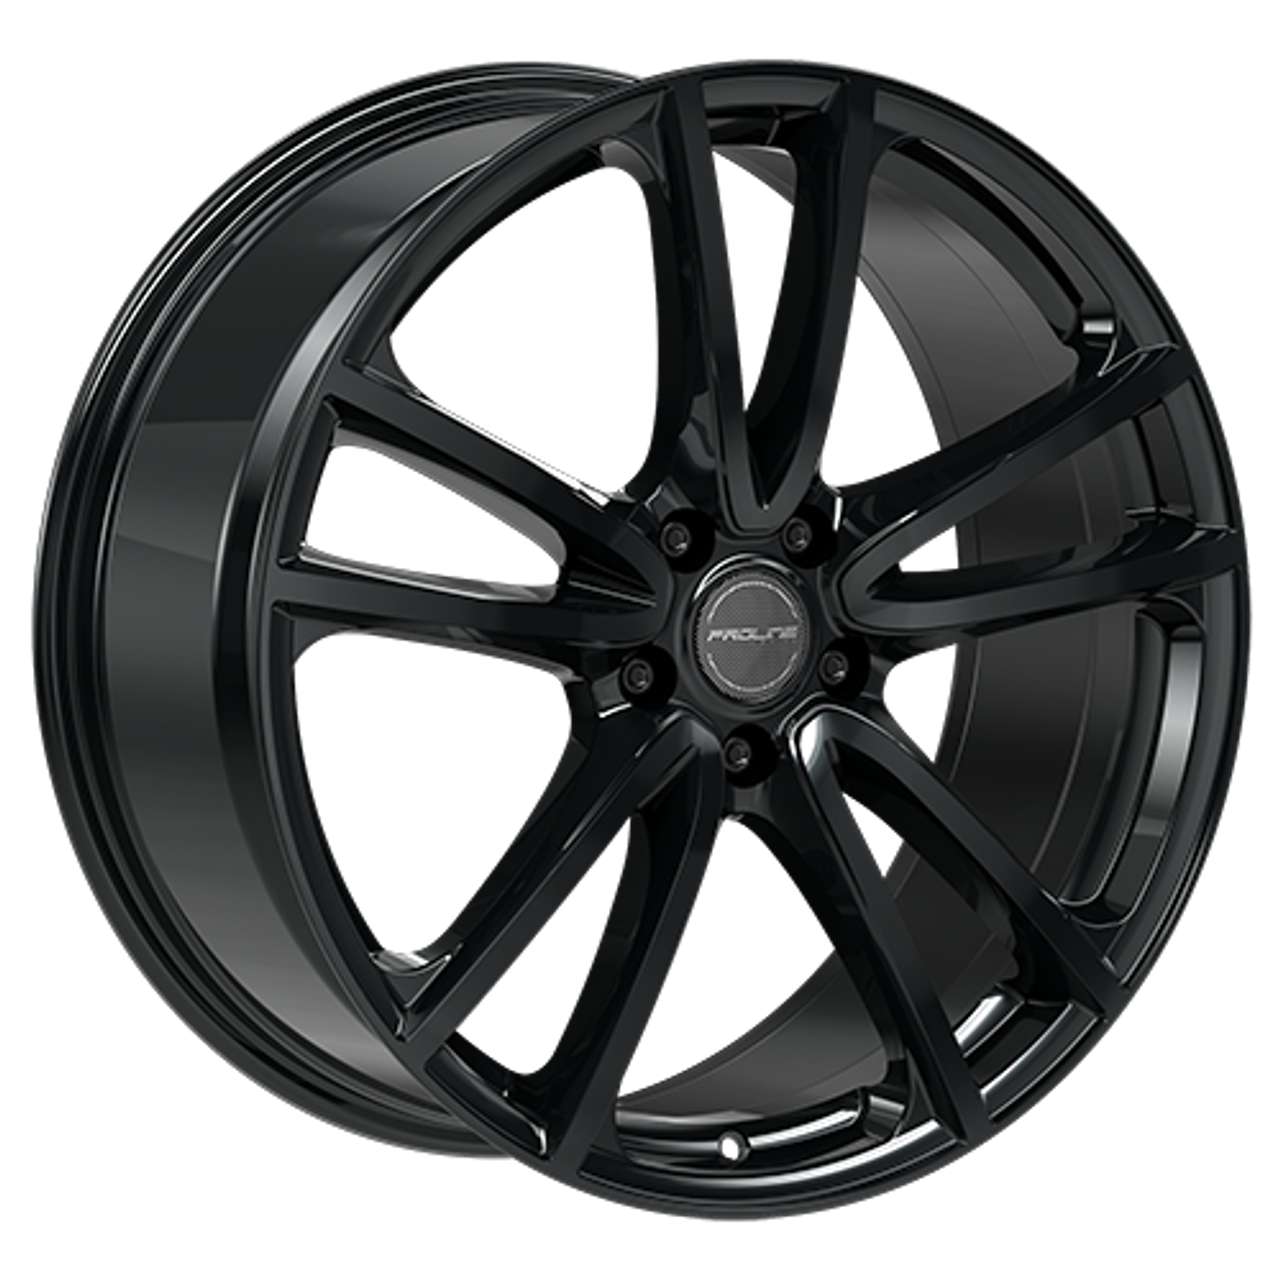 PROLINE CX300 black glossy 8.5Jx20 5x114.3 ET45 von Proline